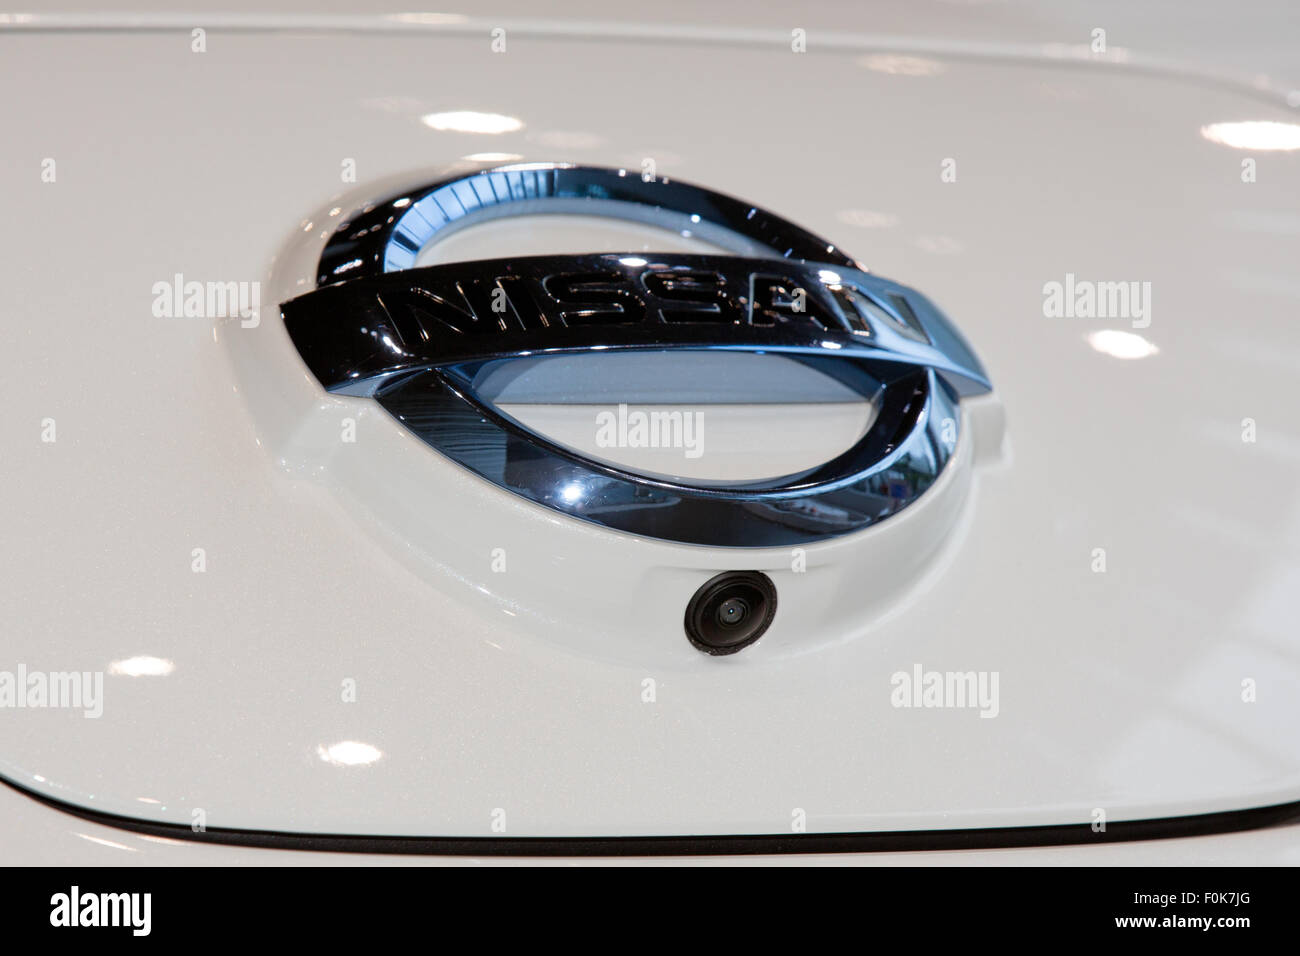 Nissan autonome Antrieb front Ansicht Kamera 2015 Nissan Global Headquarters Gallery Stockfoto